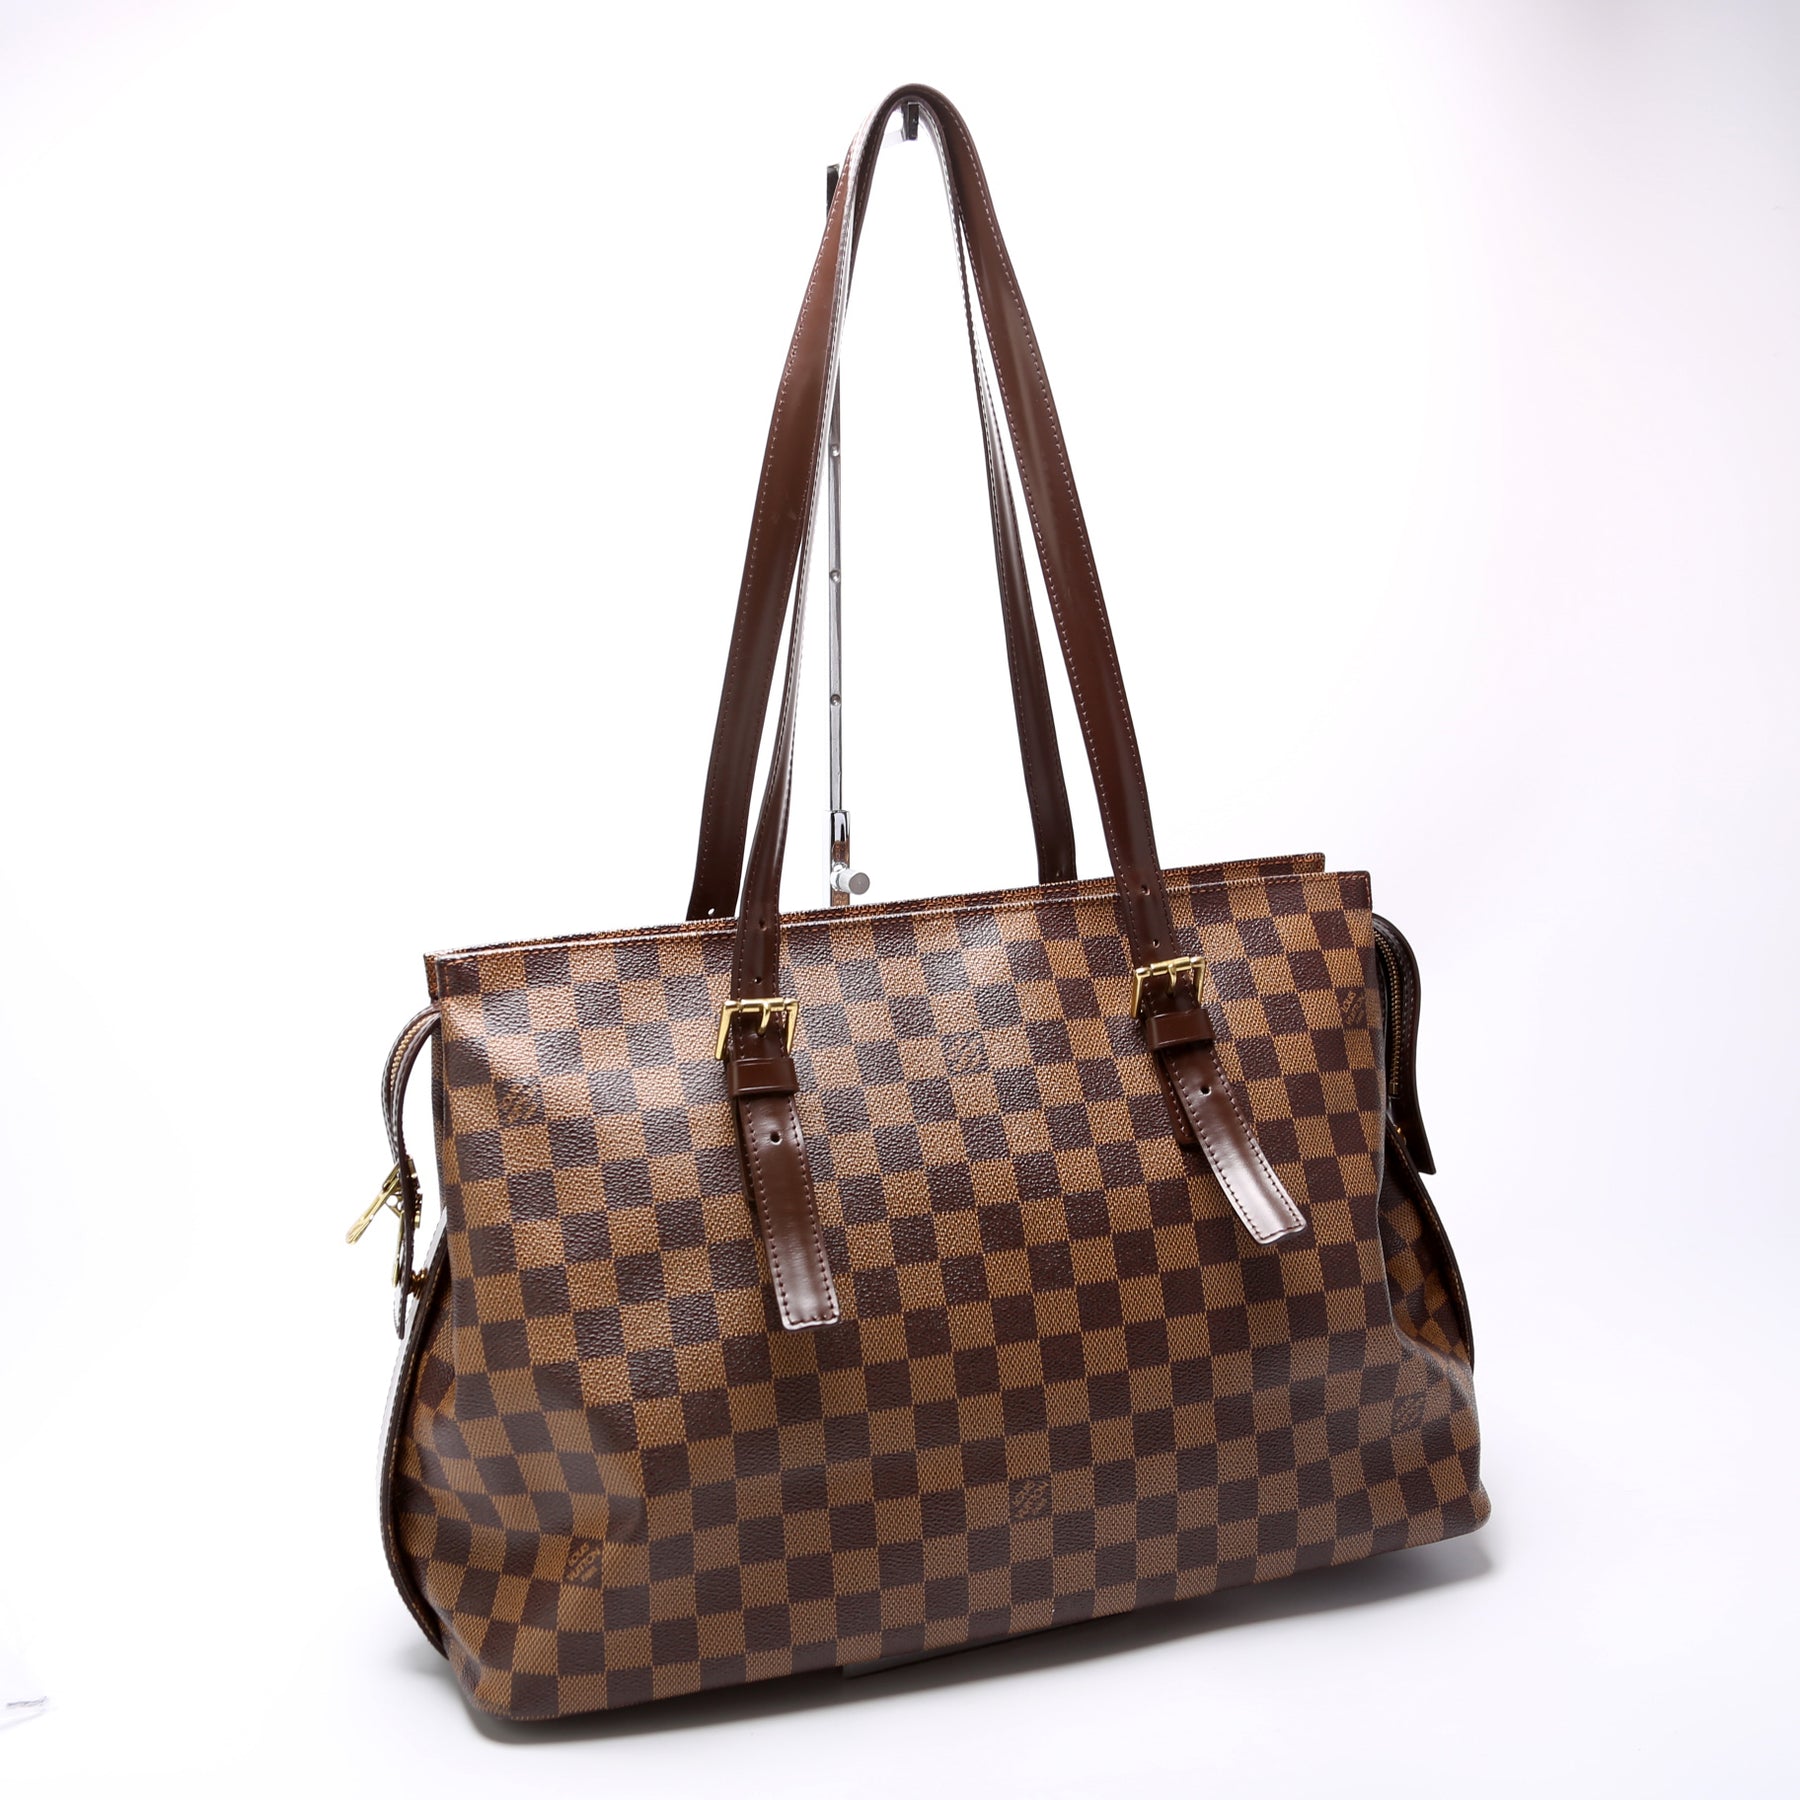 Louis Vuitton Chelsea Damier Ebene Shoulder Bag Leather Red Brown